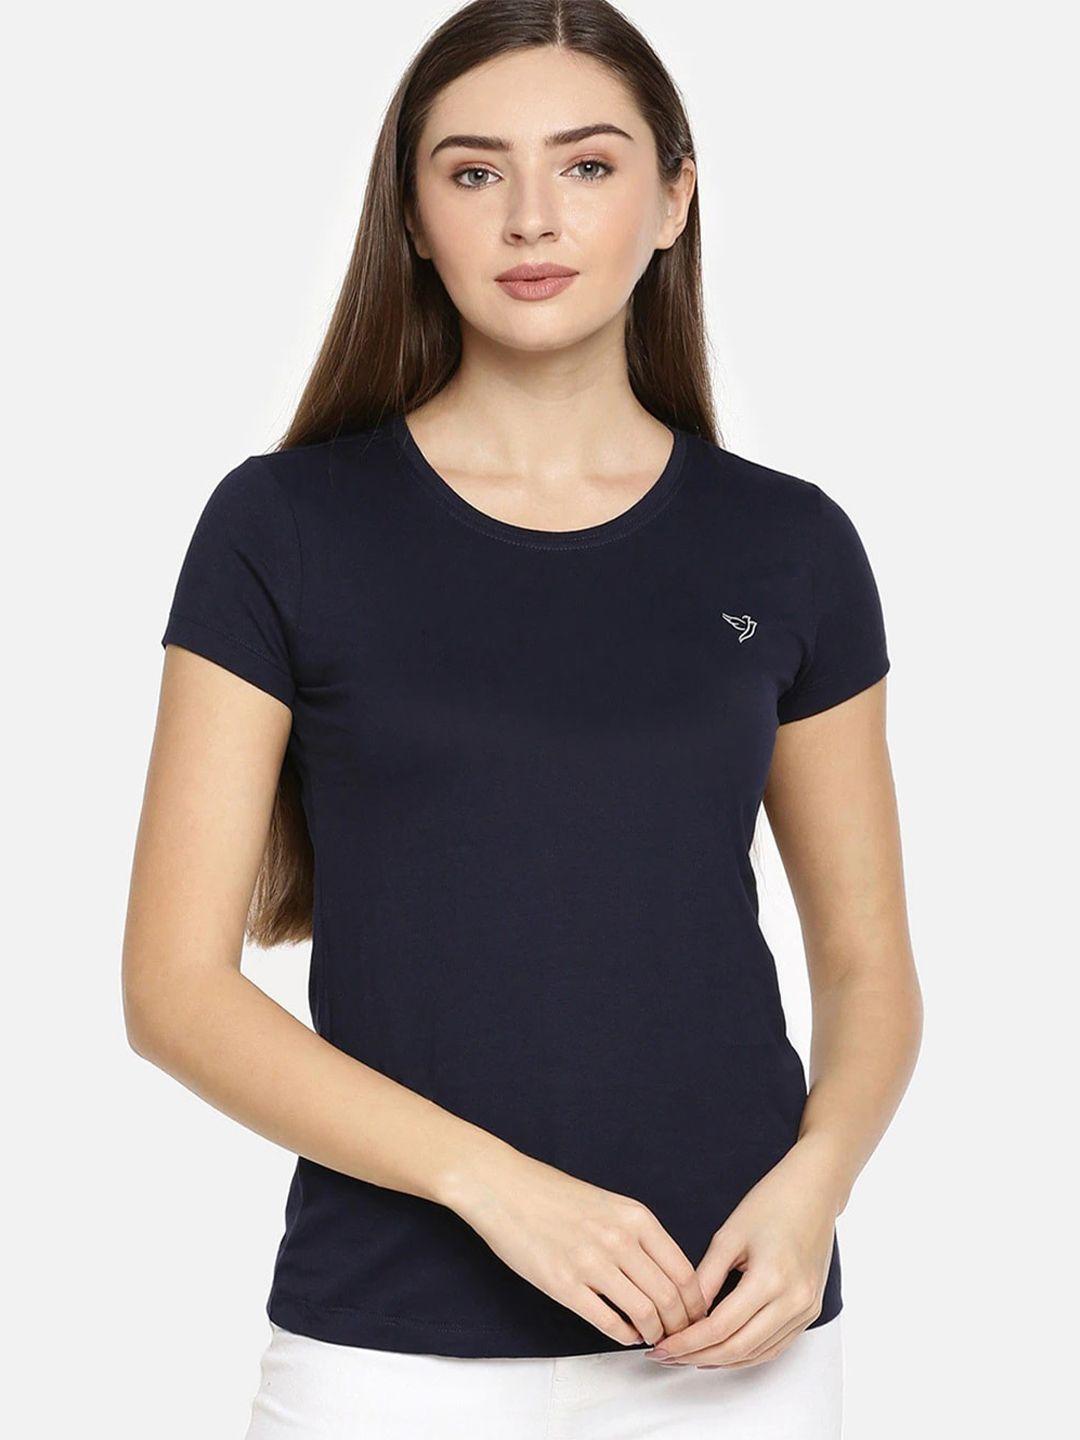 twin-birds-women-slim-fit-short-sleeves-pure-cotton-t-shirt